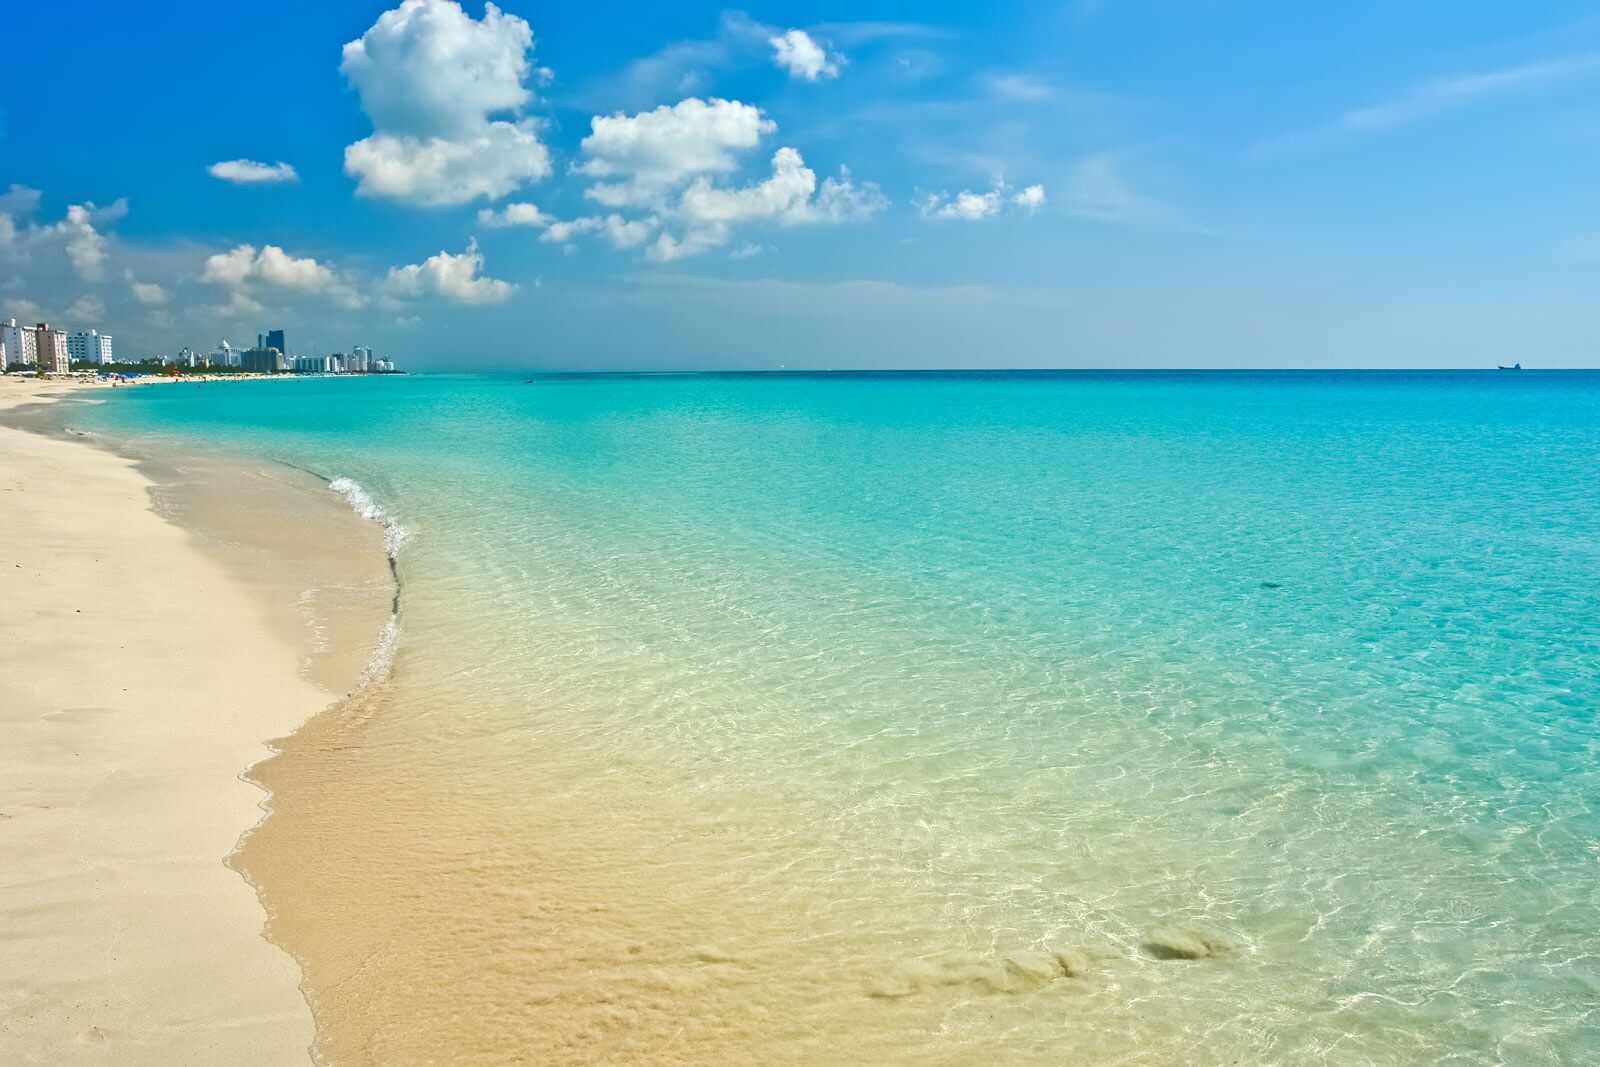 best beaches in florida - South Beach in Miami Florida